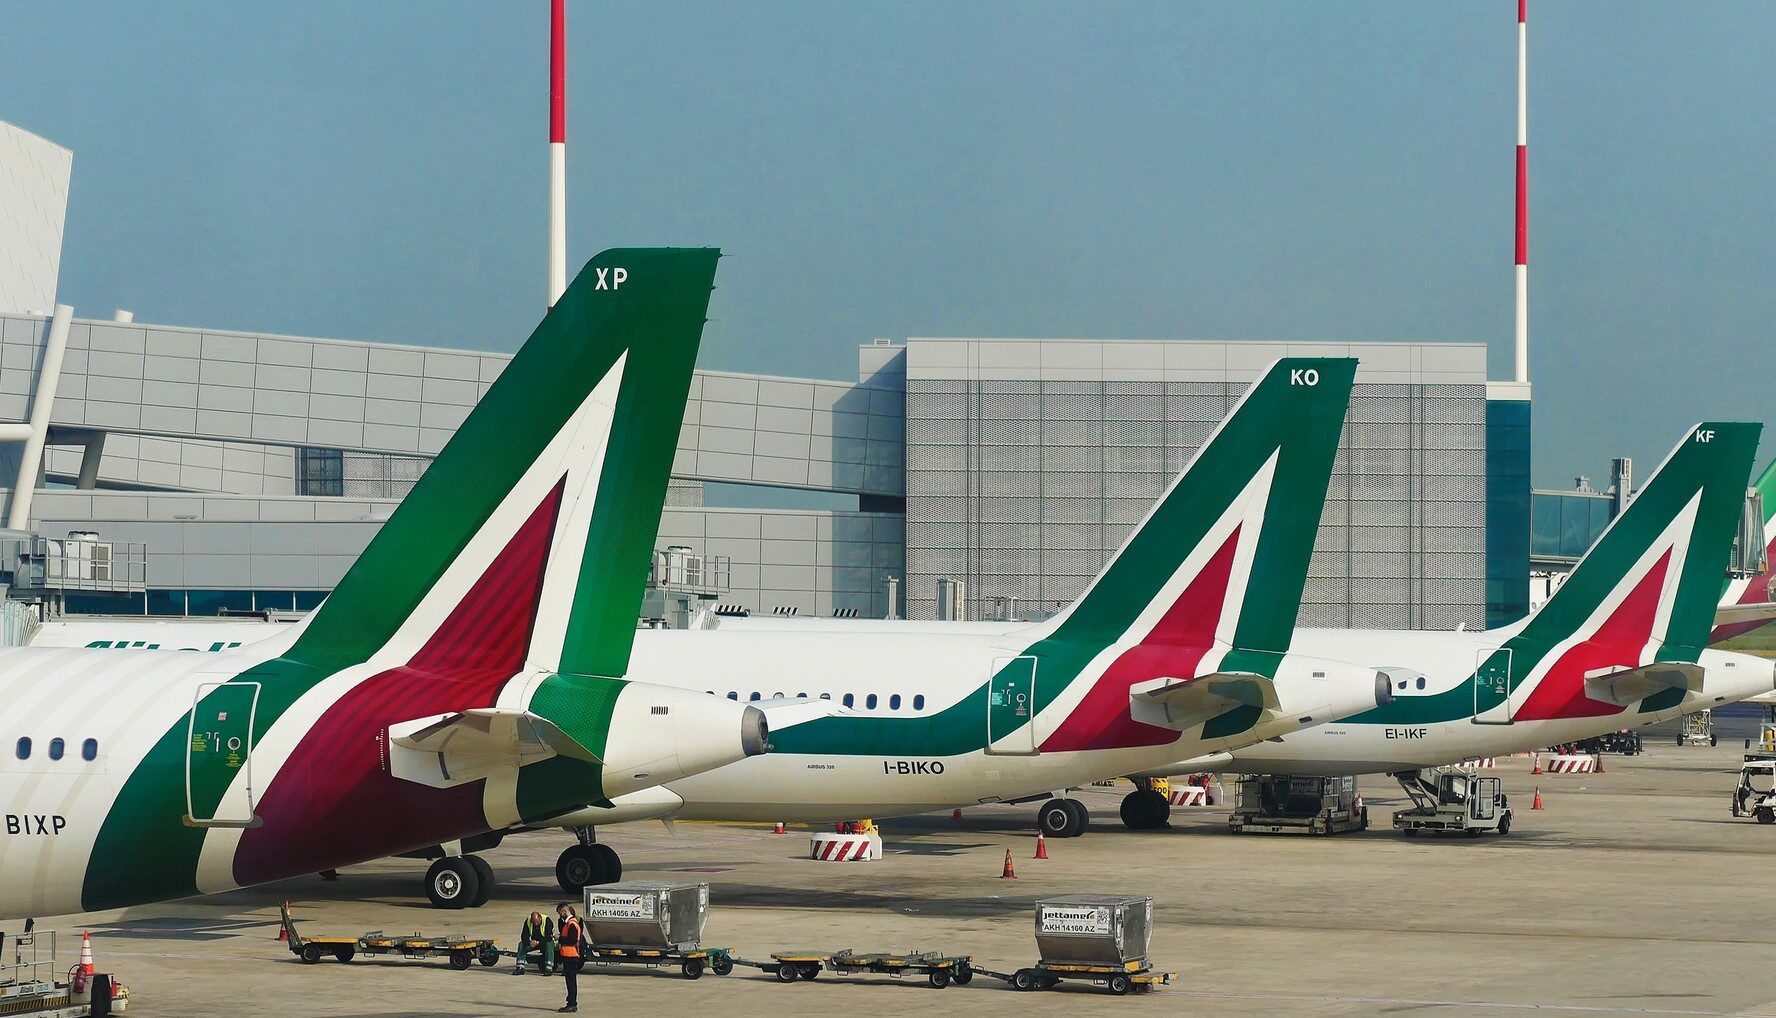 Alitalia Airline Airplanes parked at Leonardo da Vinci Airport